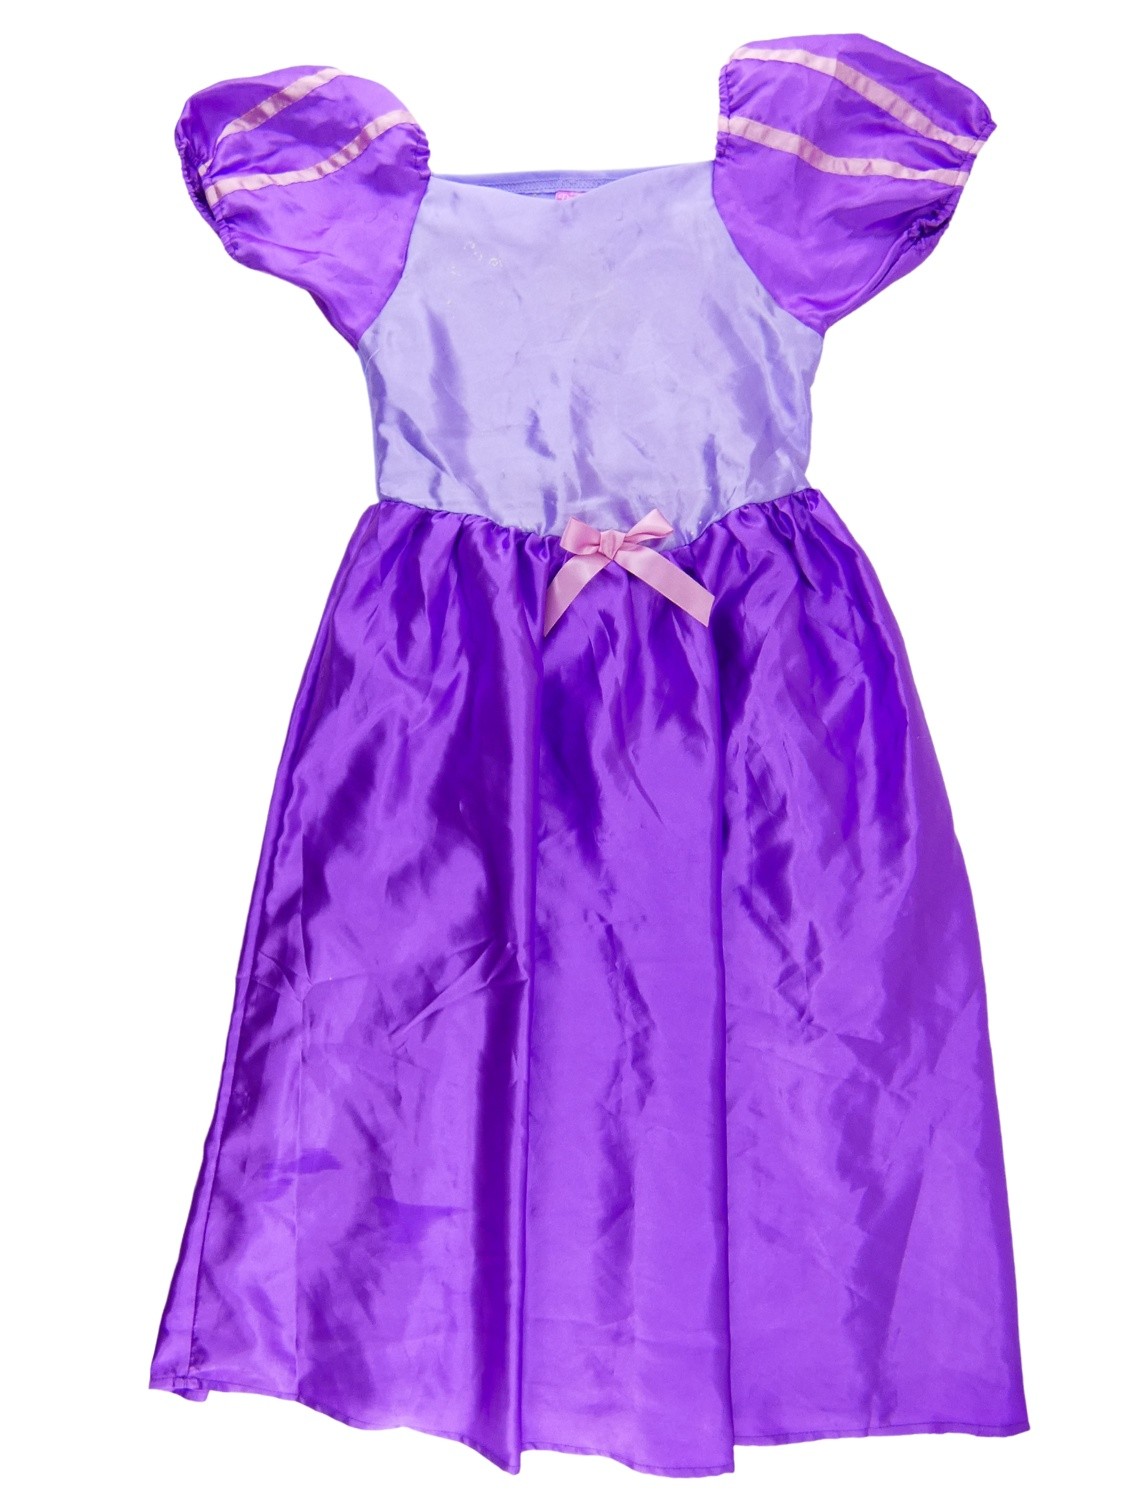 Robe princesse manches bouffantes DISNEY taille 7-8 ans déguisement